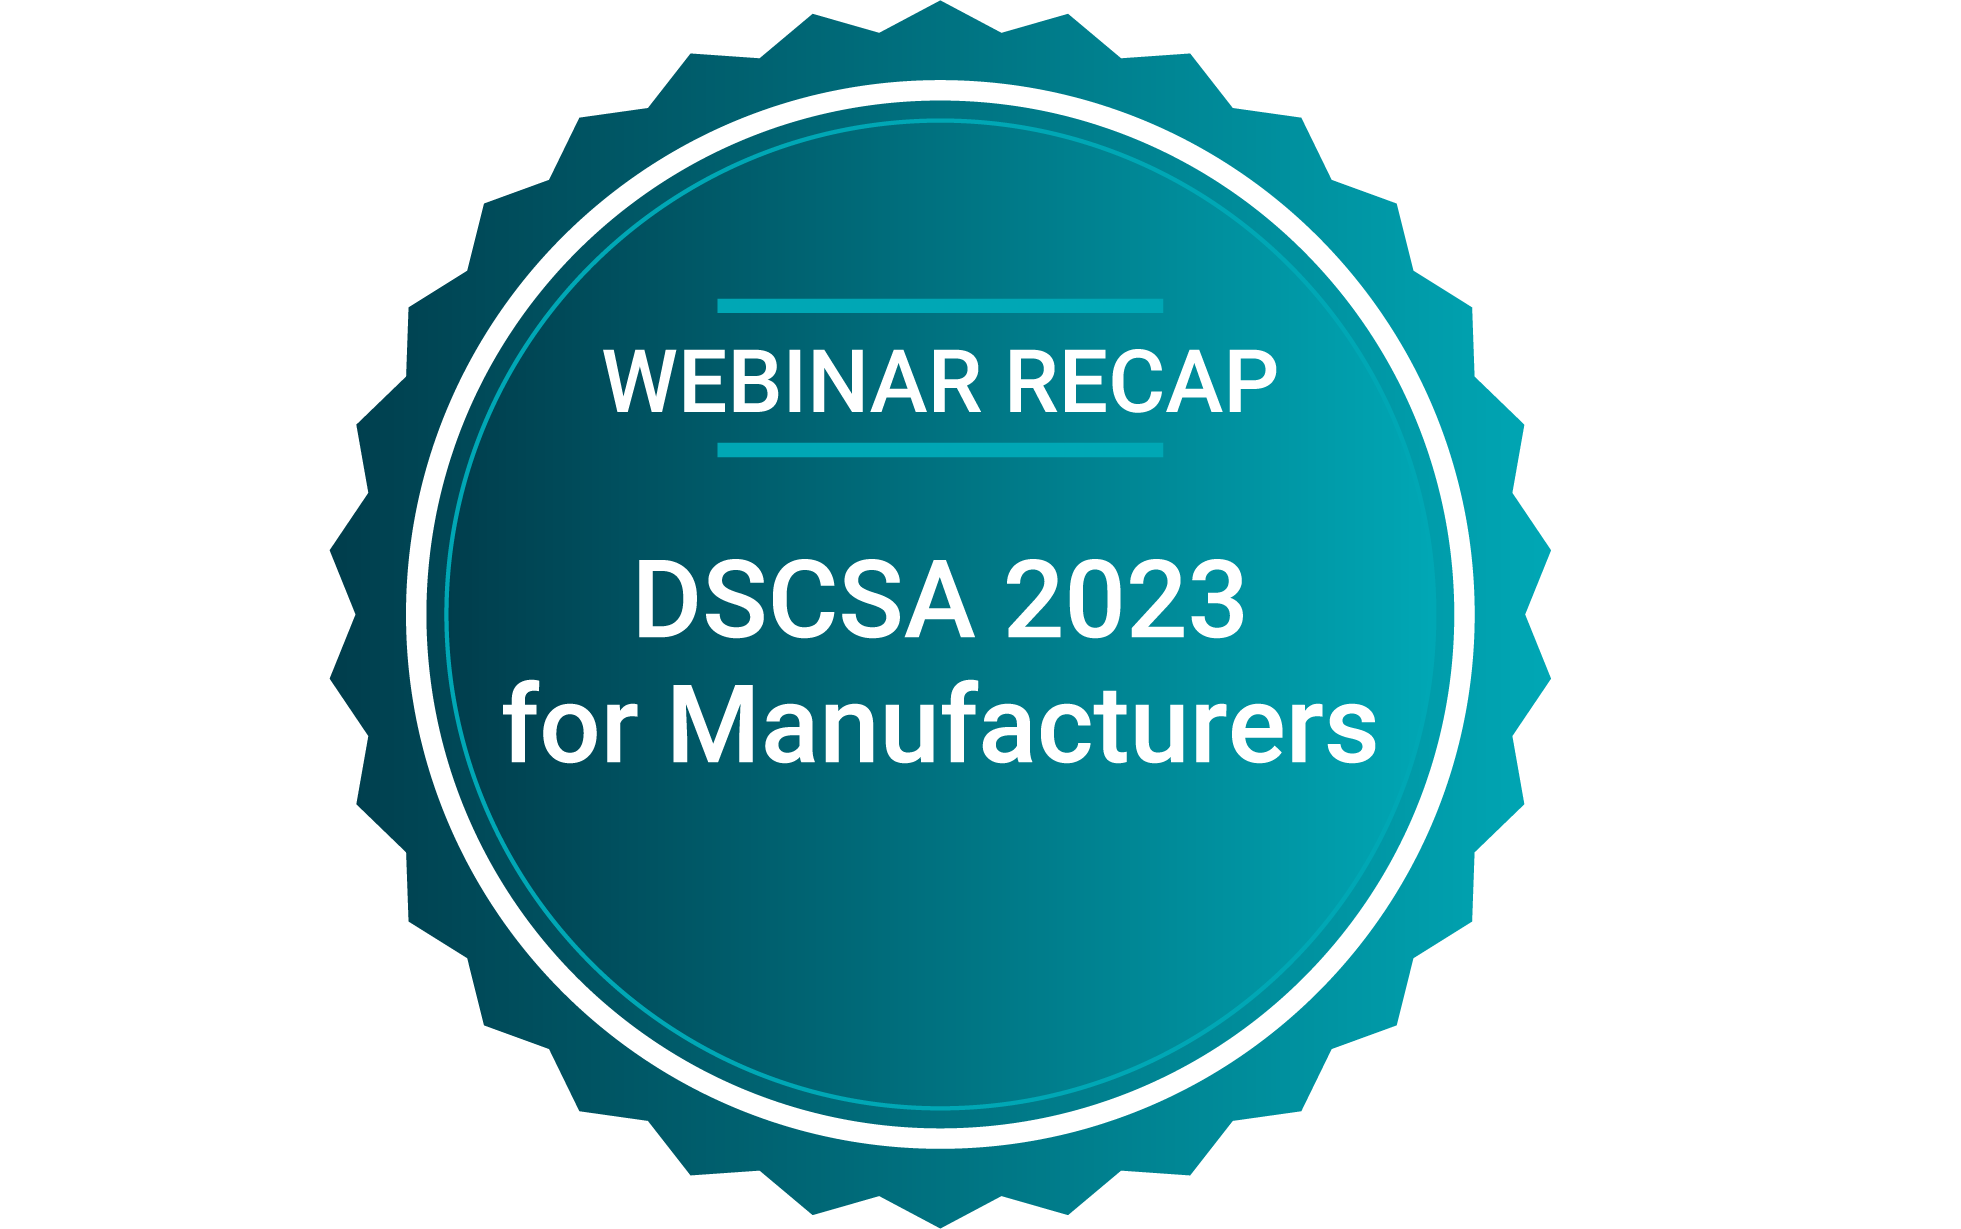 Webinar Recap DSCSA 2023 for Manufacturers